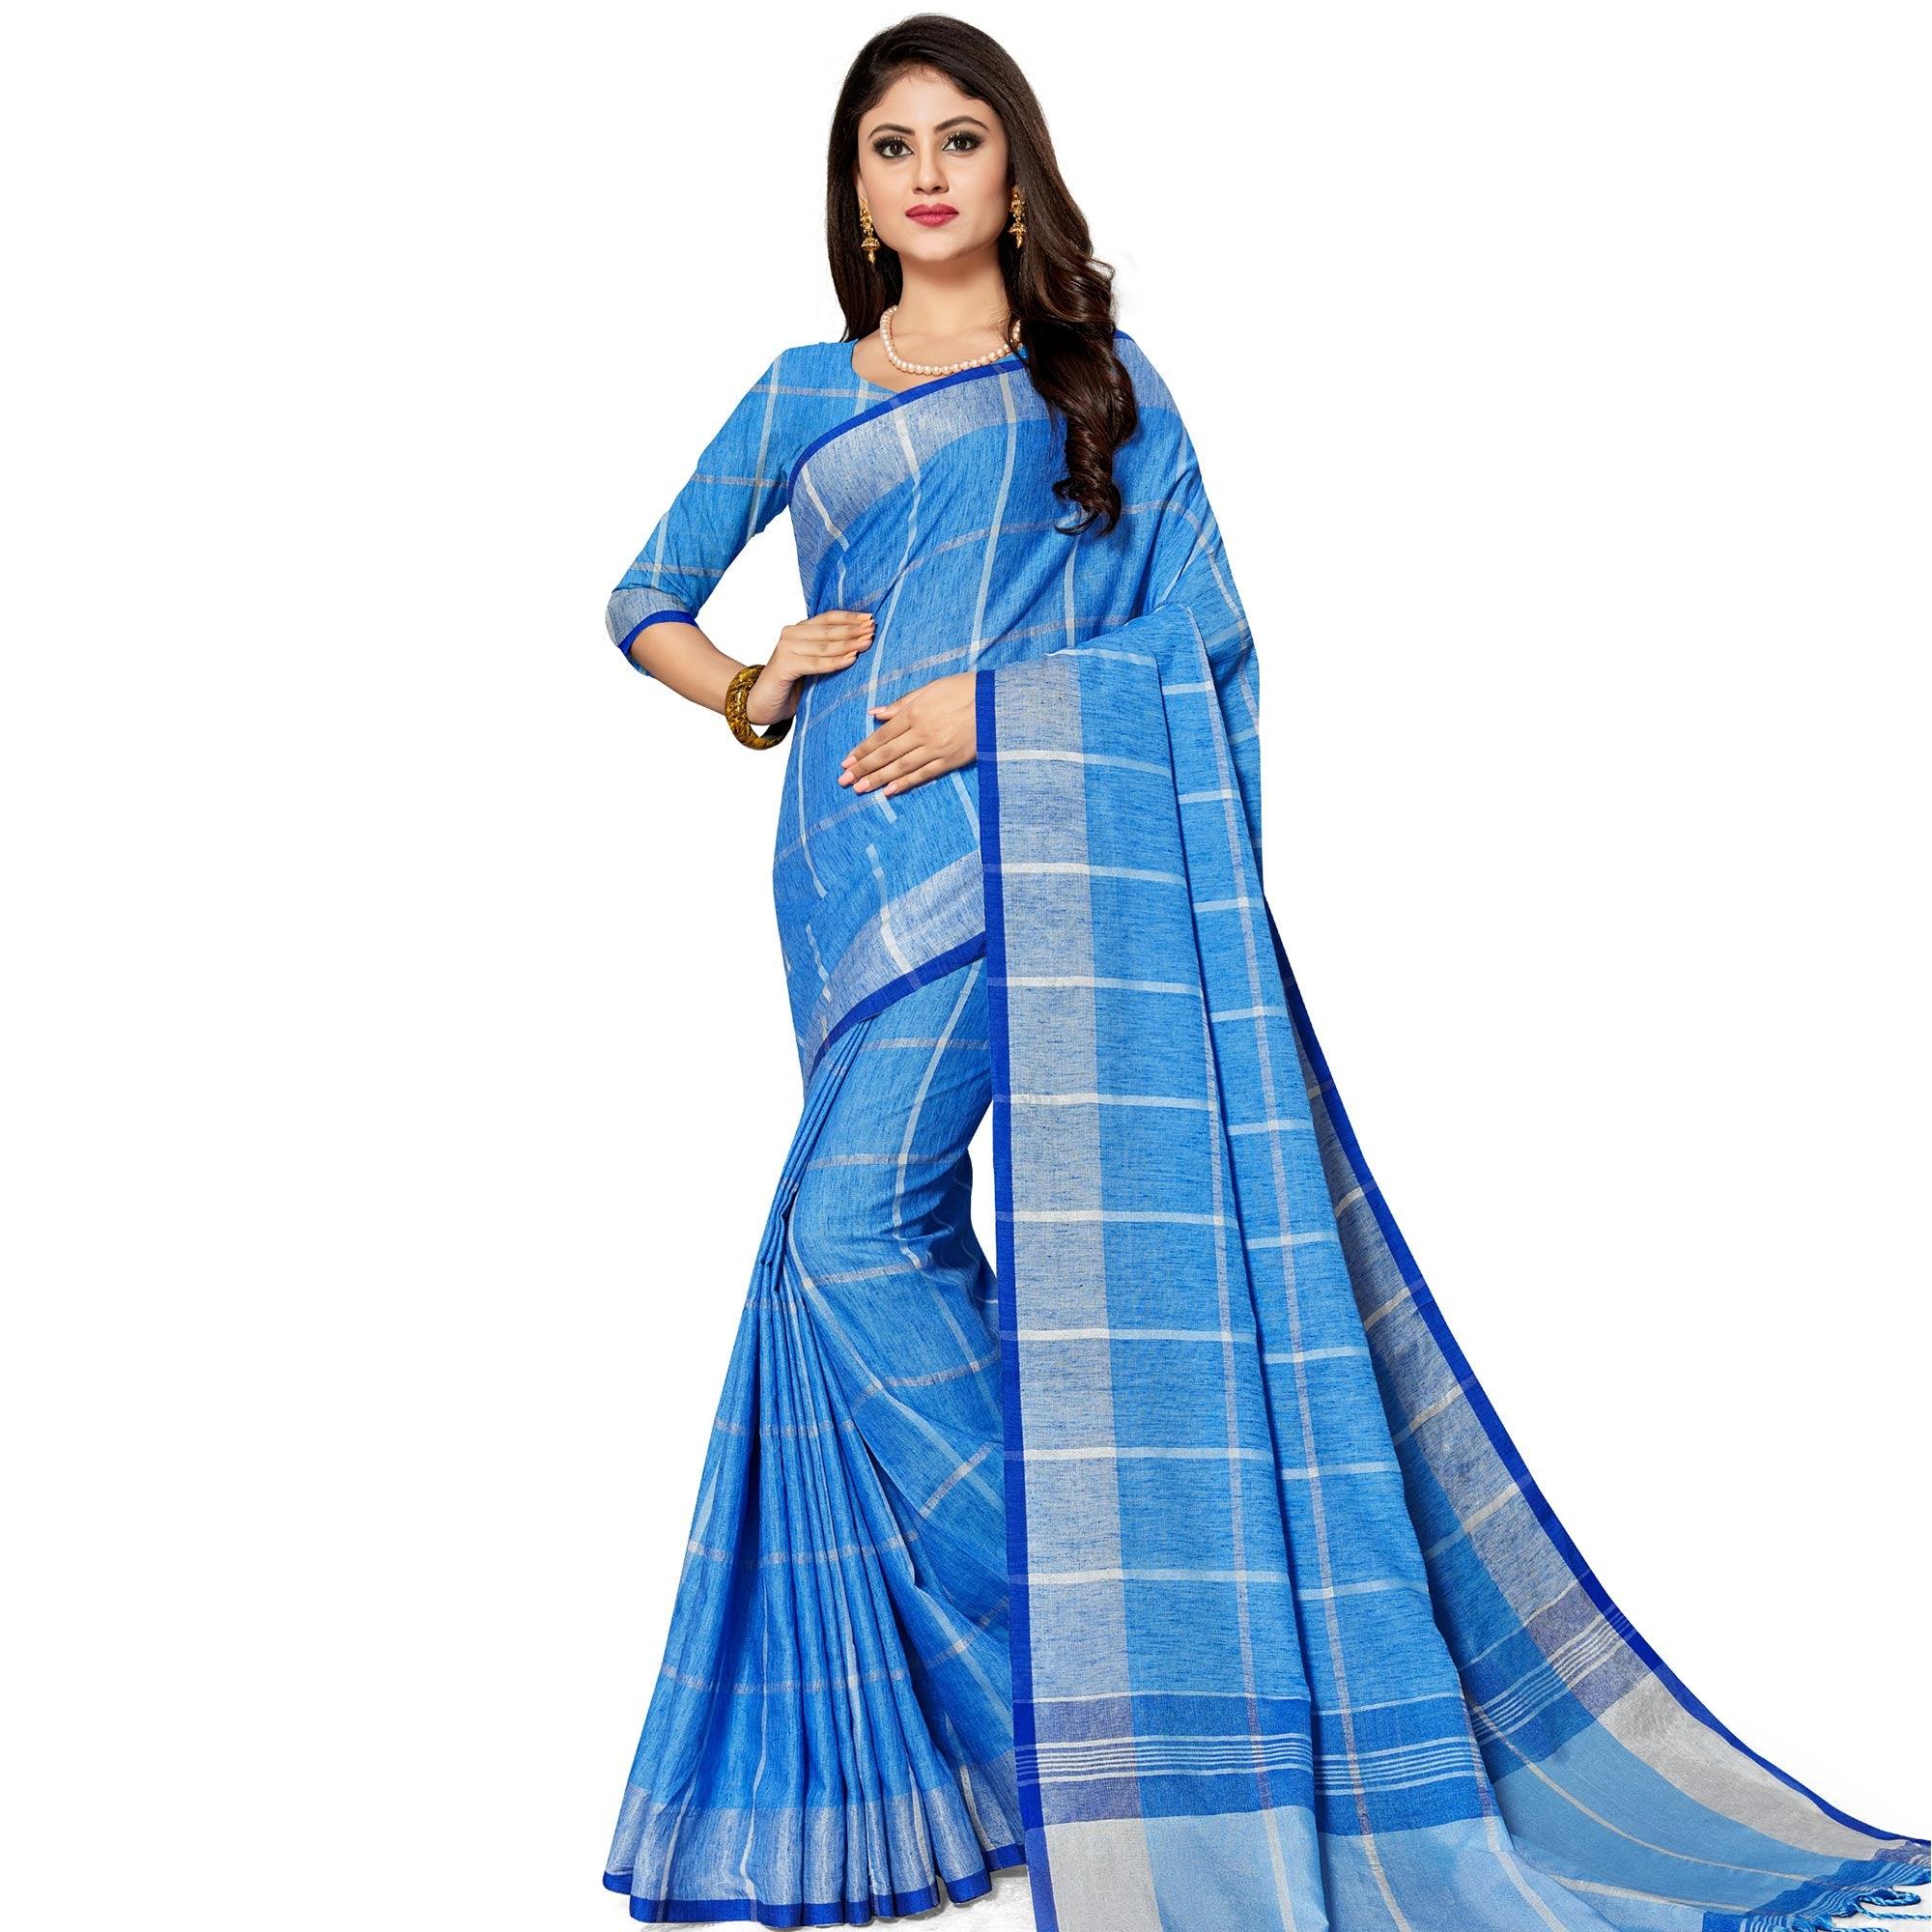 Marvellous Blue Colored Fesive Wear Stripe Print Cotton Silk Saree With Tassels - Peachmode